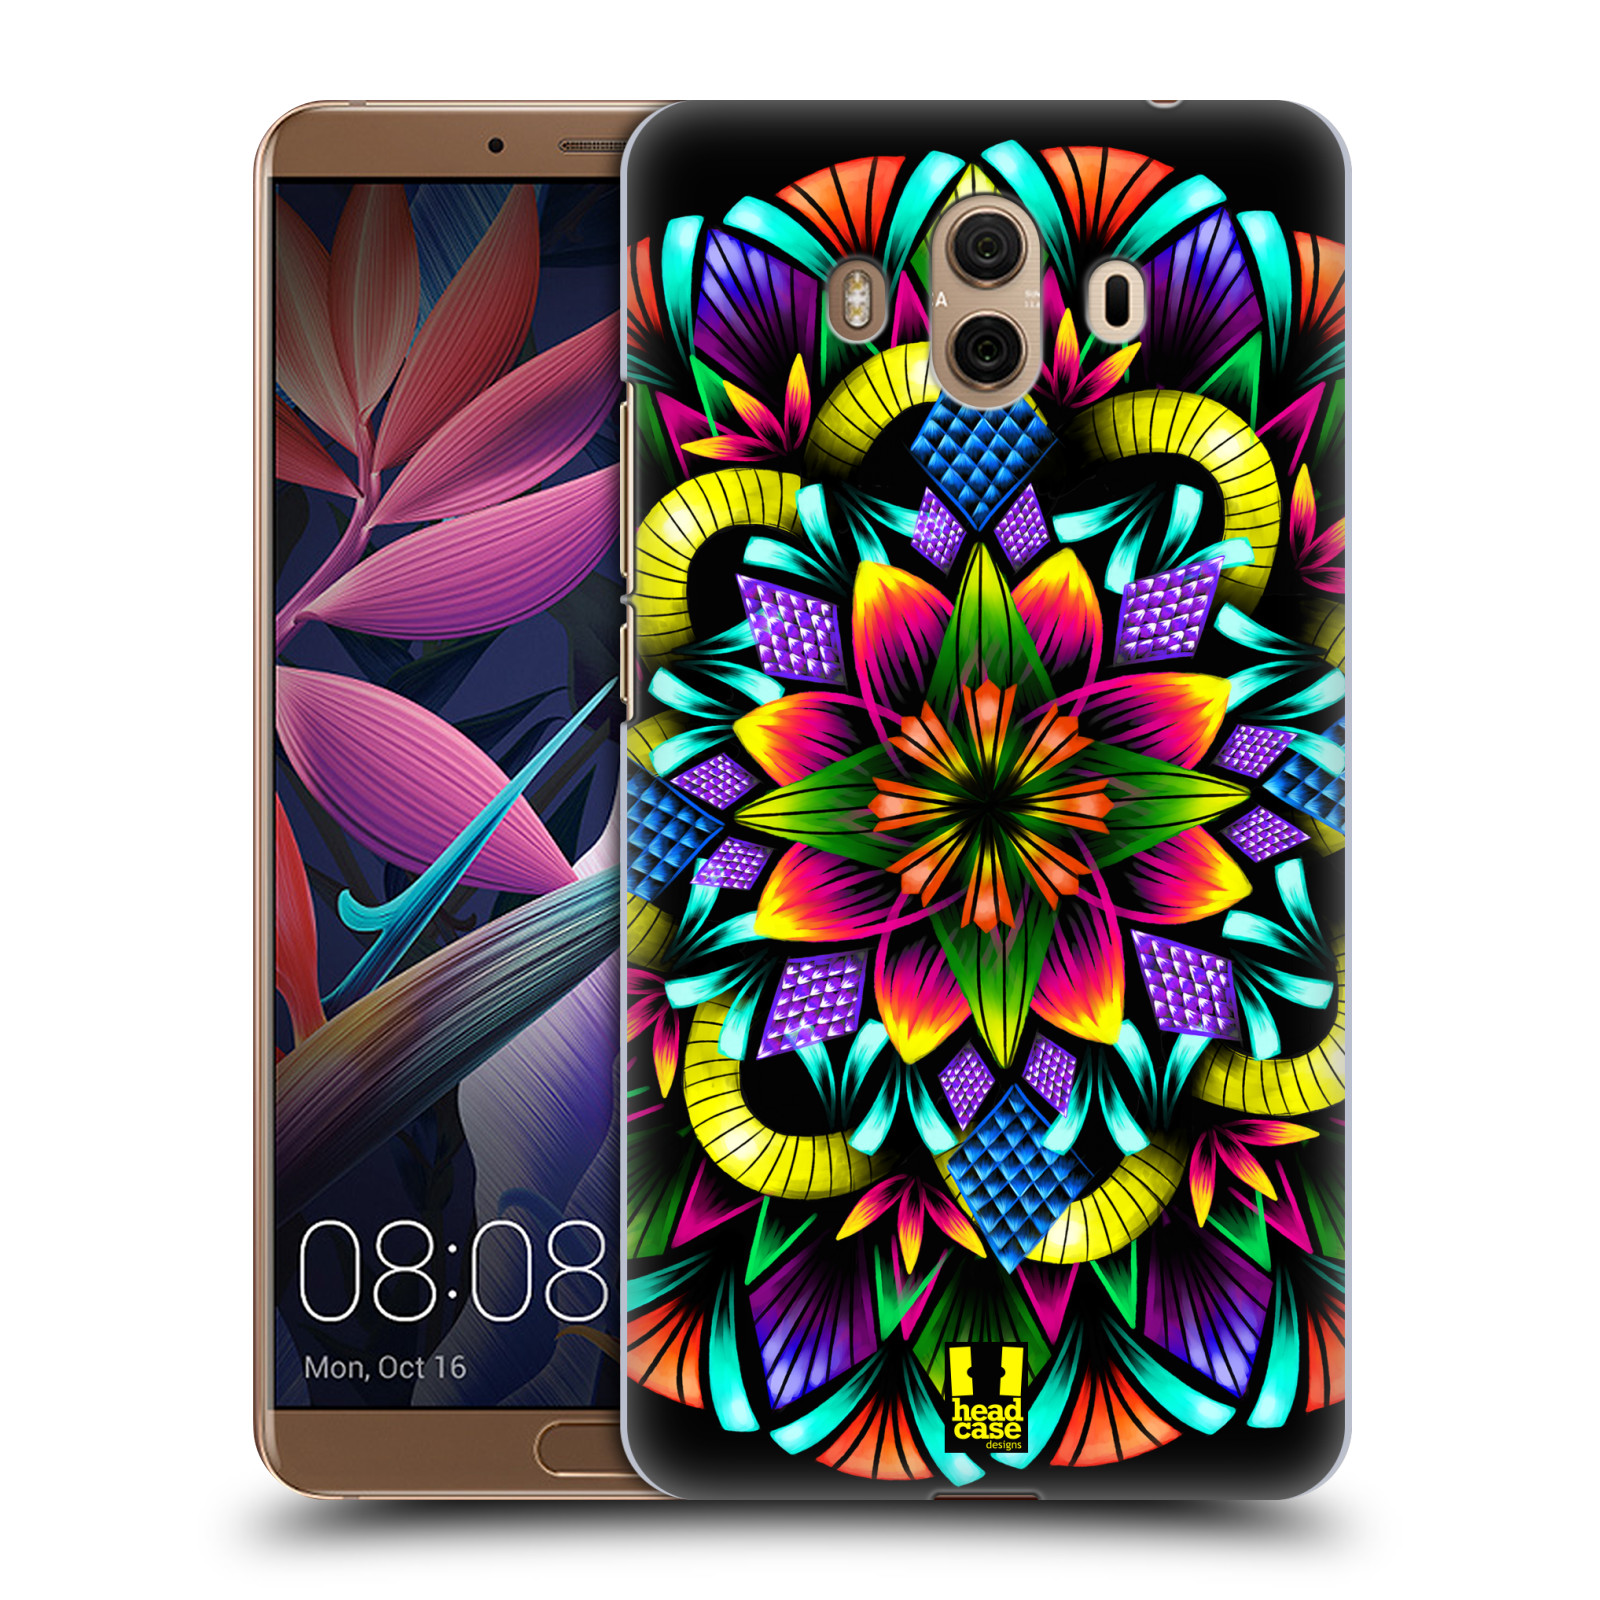 HEAD CASE plastový obal na mobil Huawei Mate 10 vzor Indie Mandala kaleidoskop barevný vzor KVĚTINA